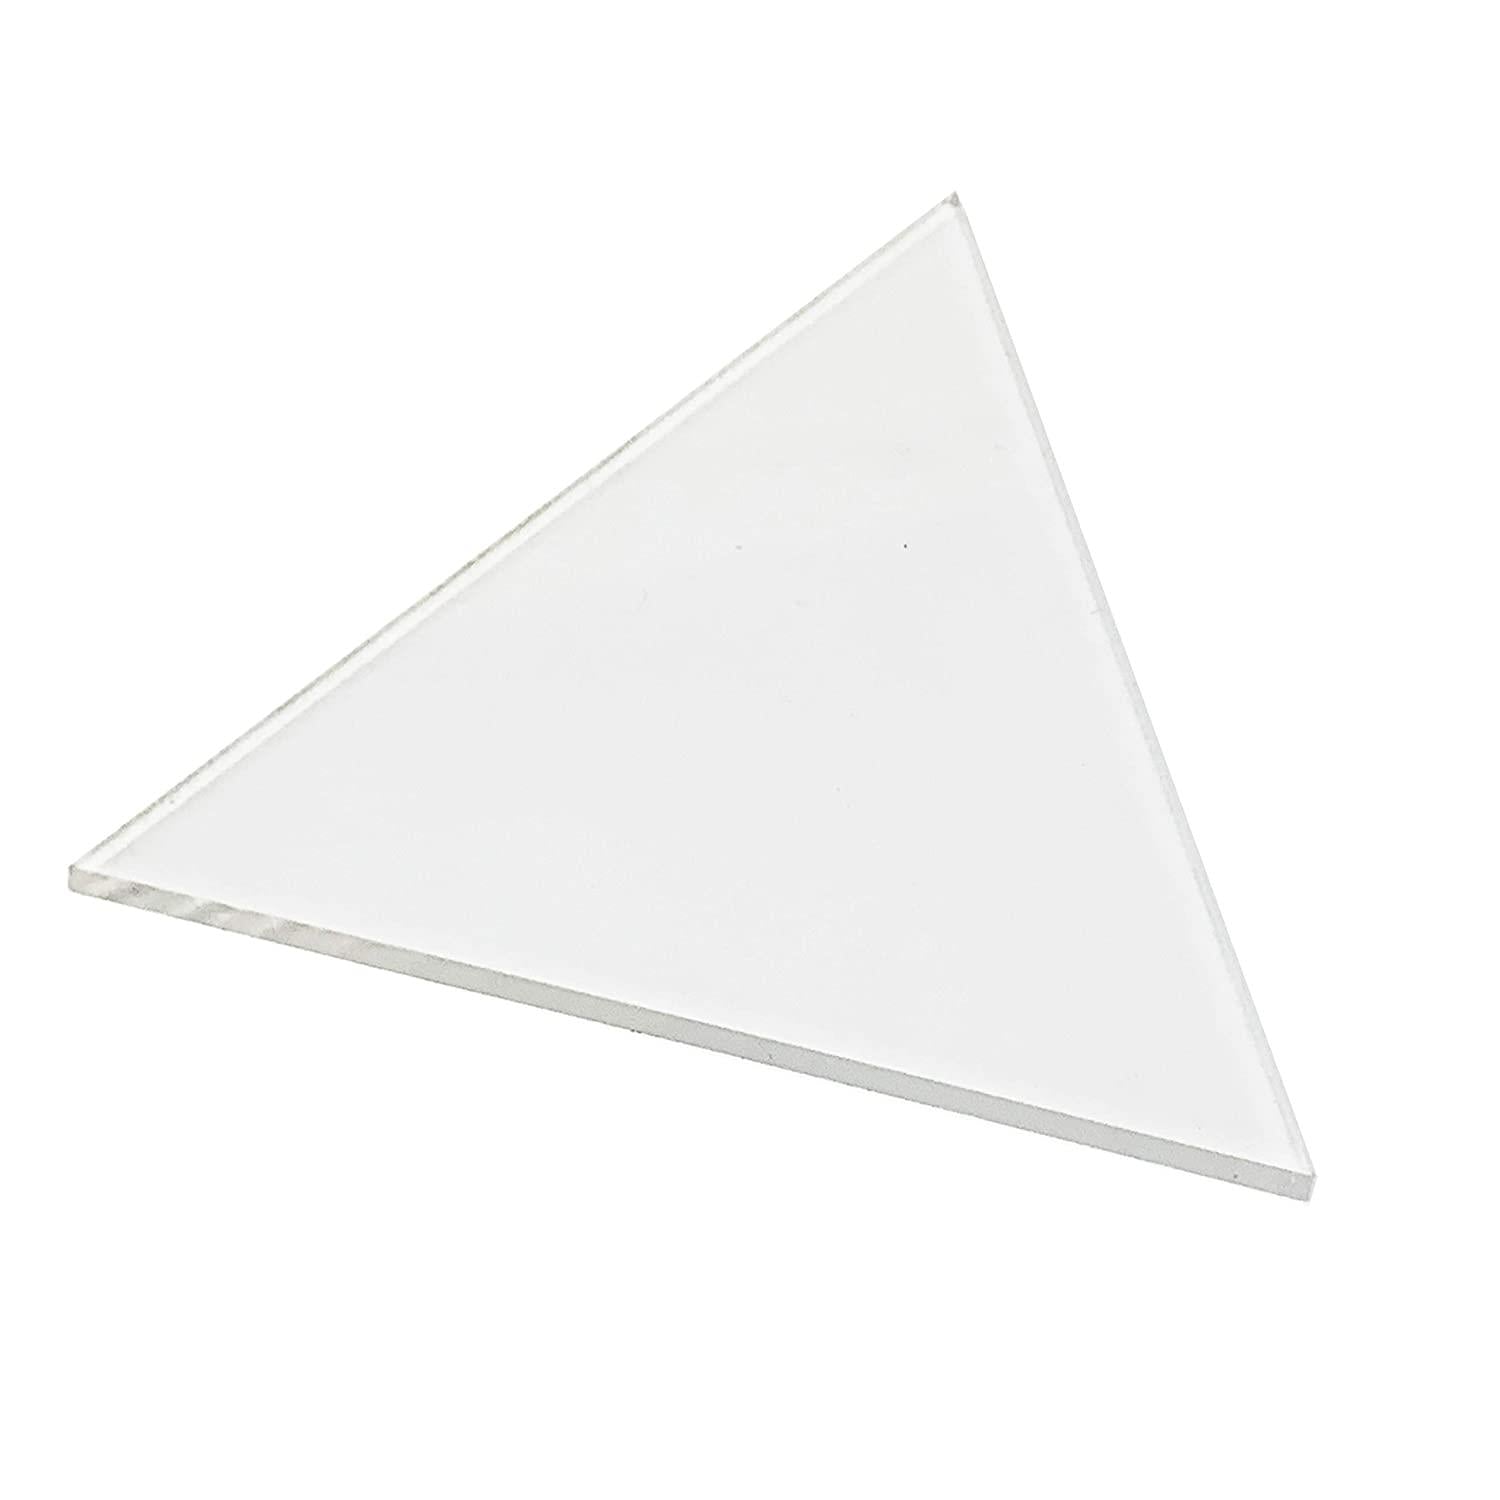 KastLite Acrylic Triangle